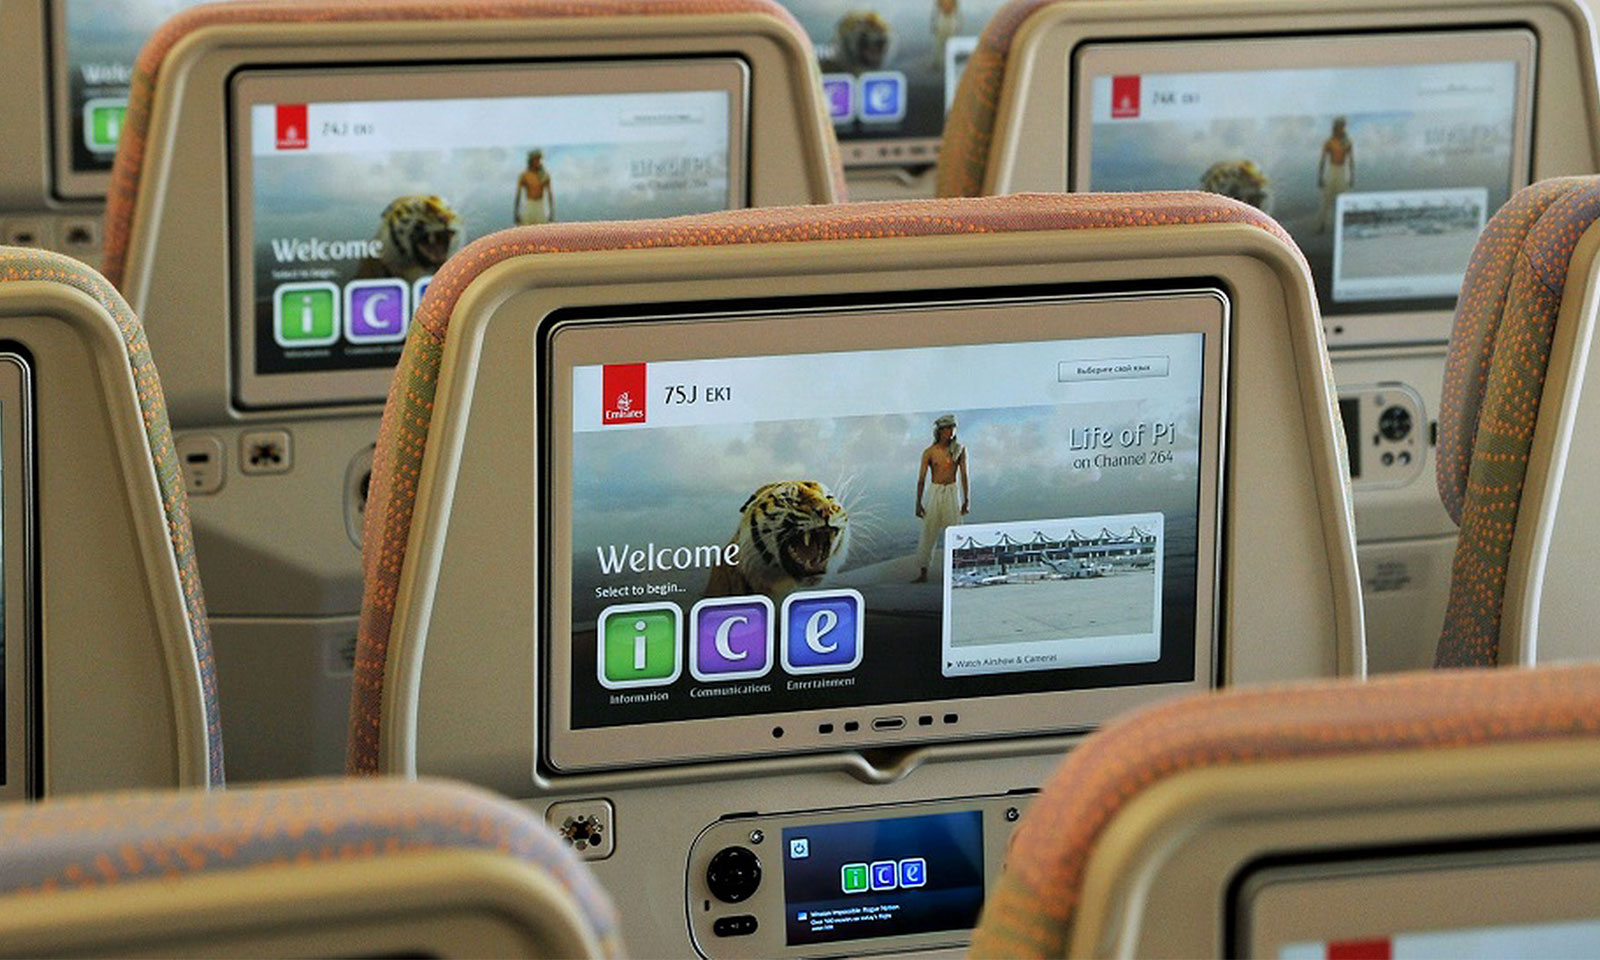 ice: Emirates' award-winning in-flight entertainment system